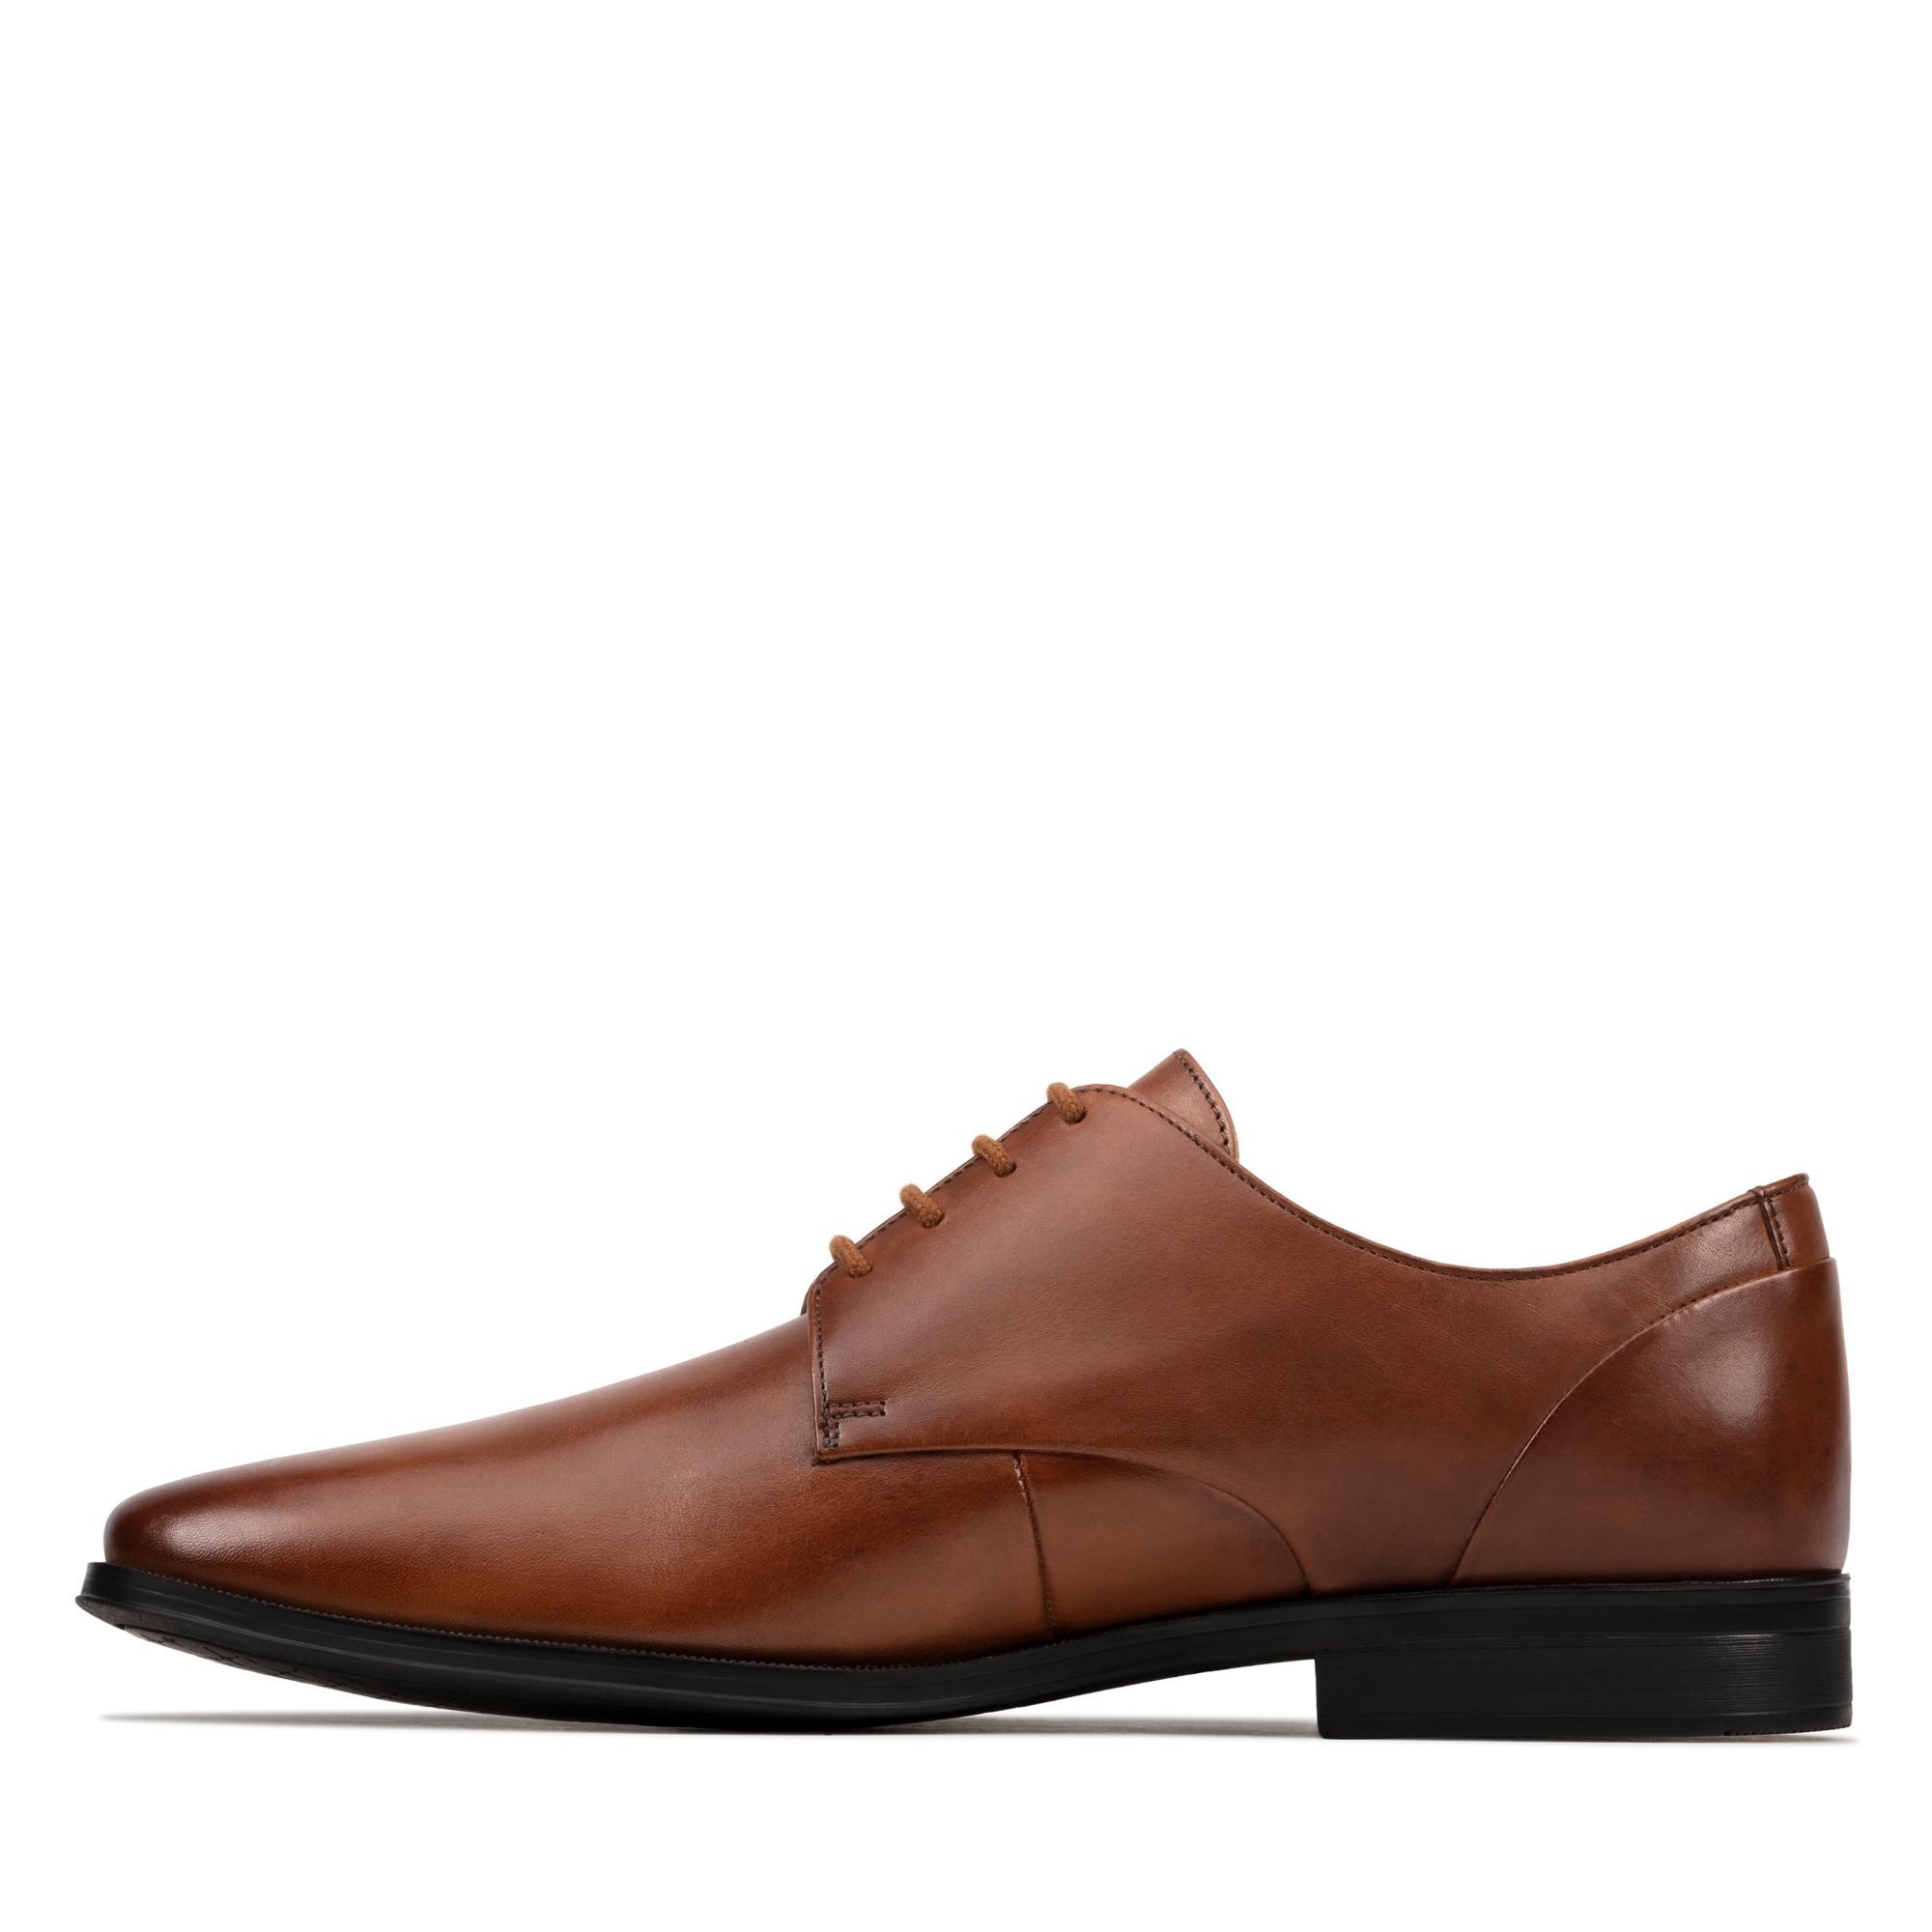 Мужская обувь Clarks Gilman plain tan leather. Доставка из США.